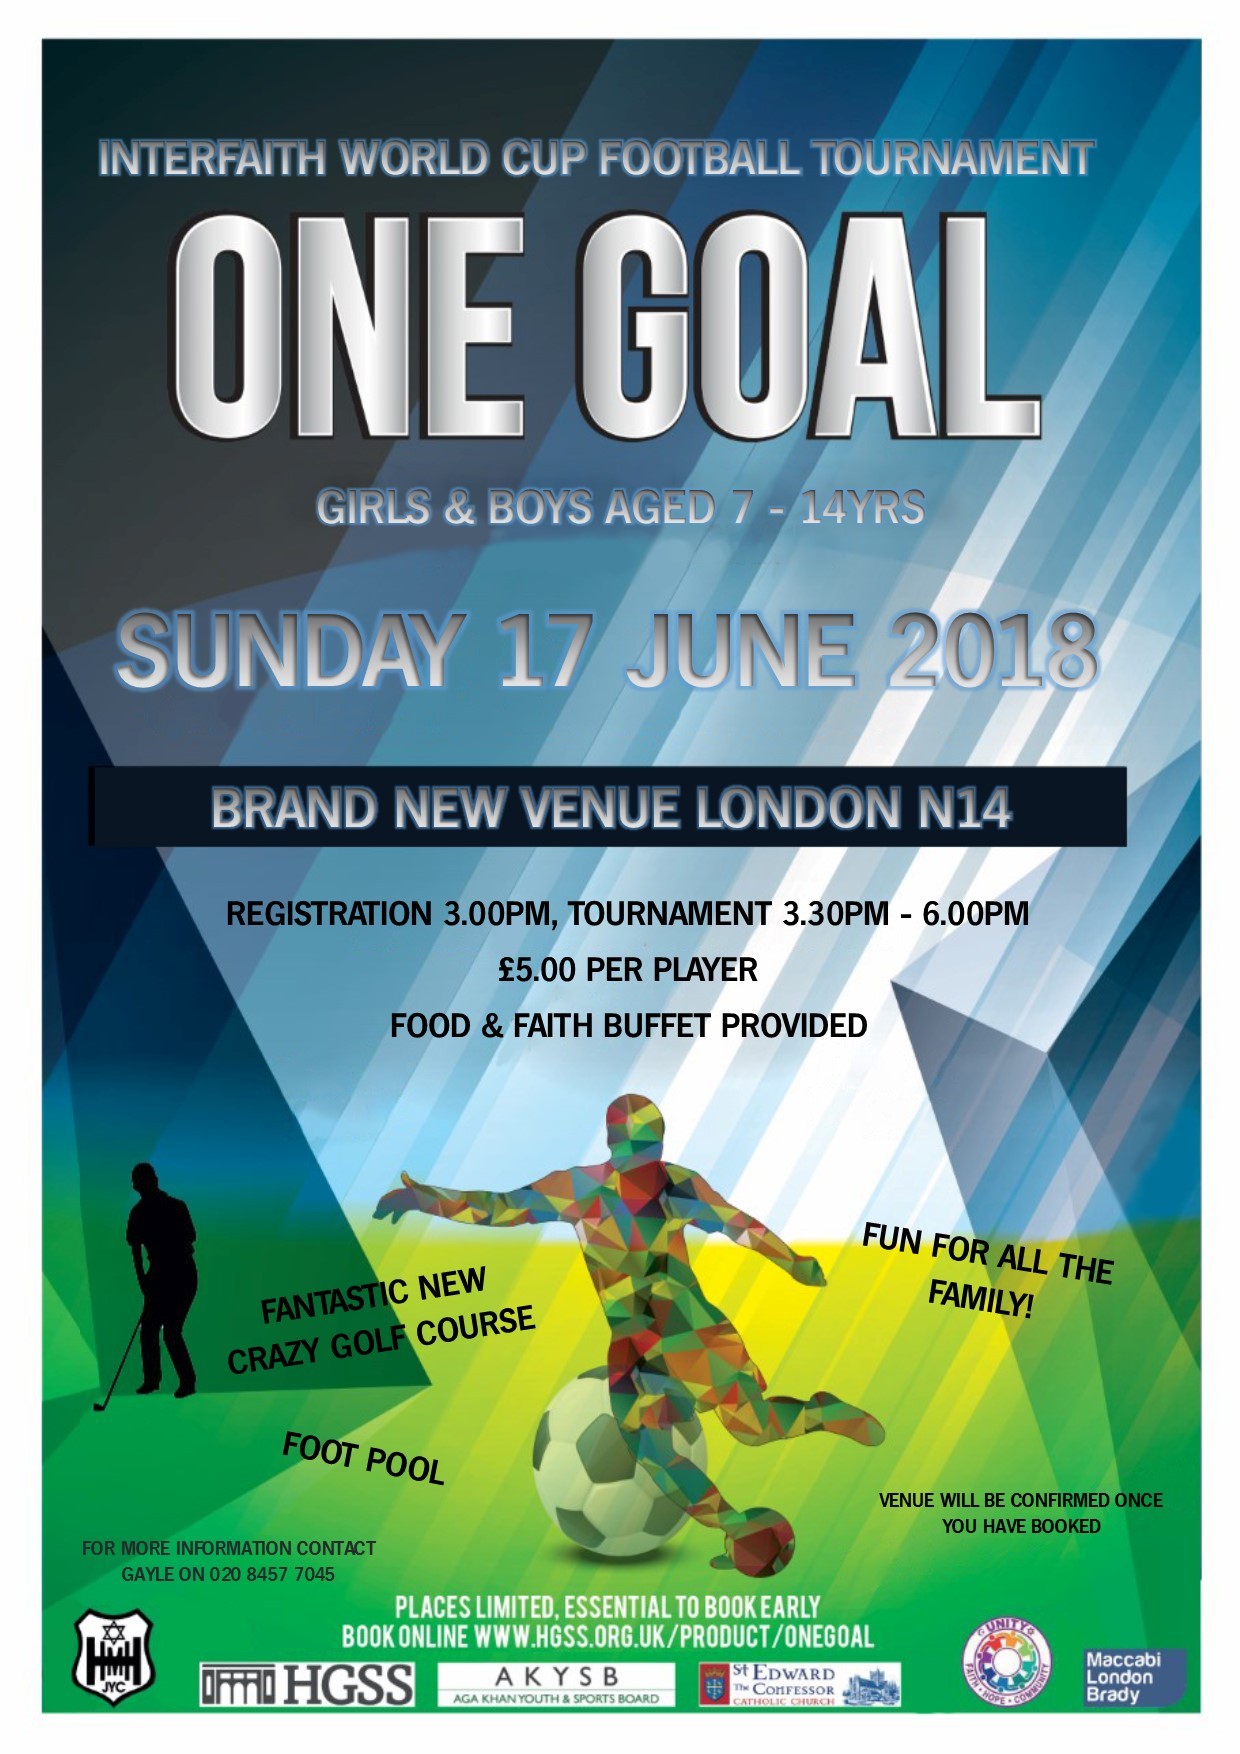 One Goal - Interfaith World Cup Football Tournament